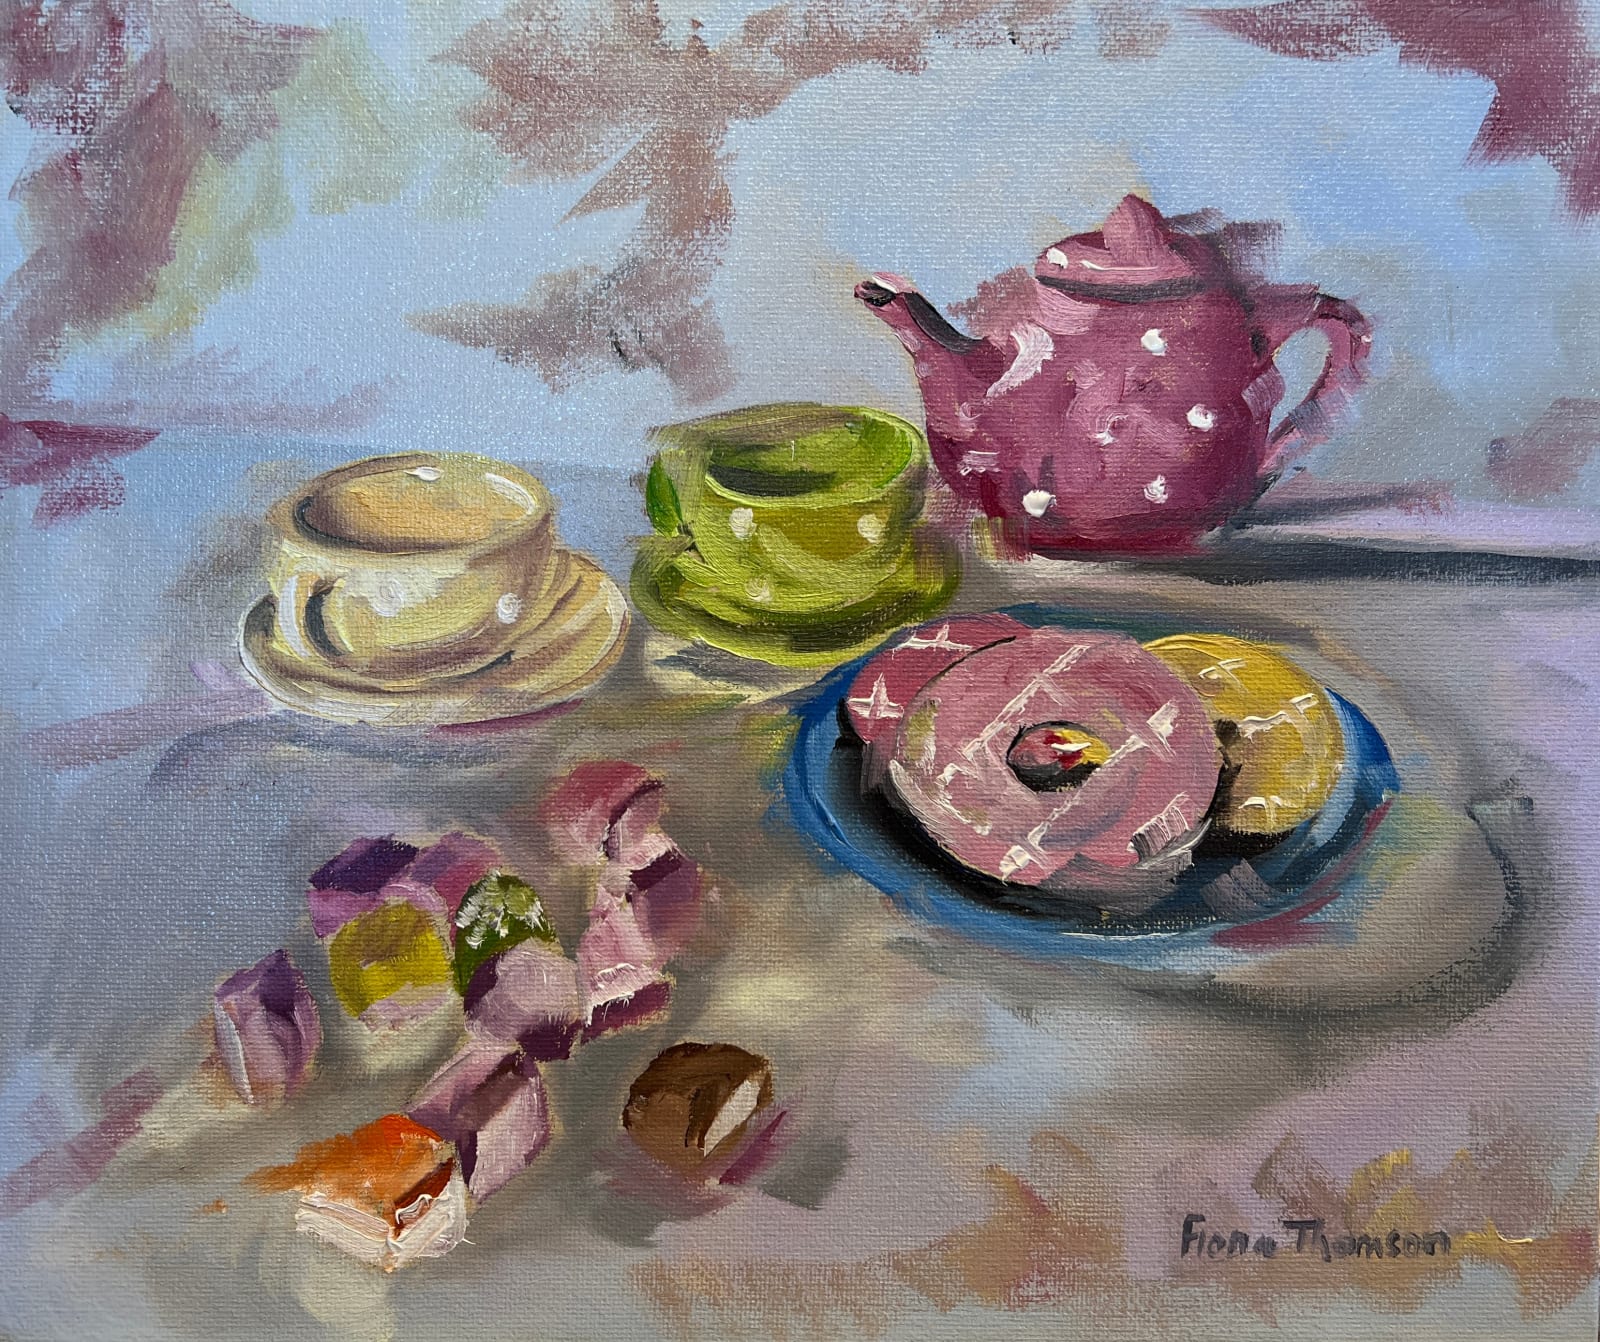 Fiona Thomson, Tea Party